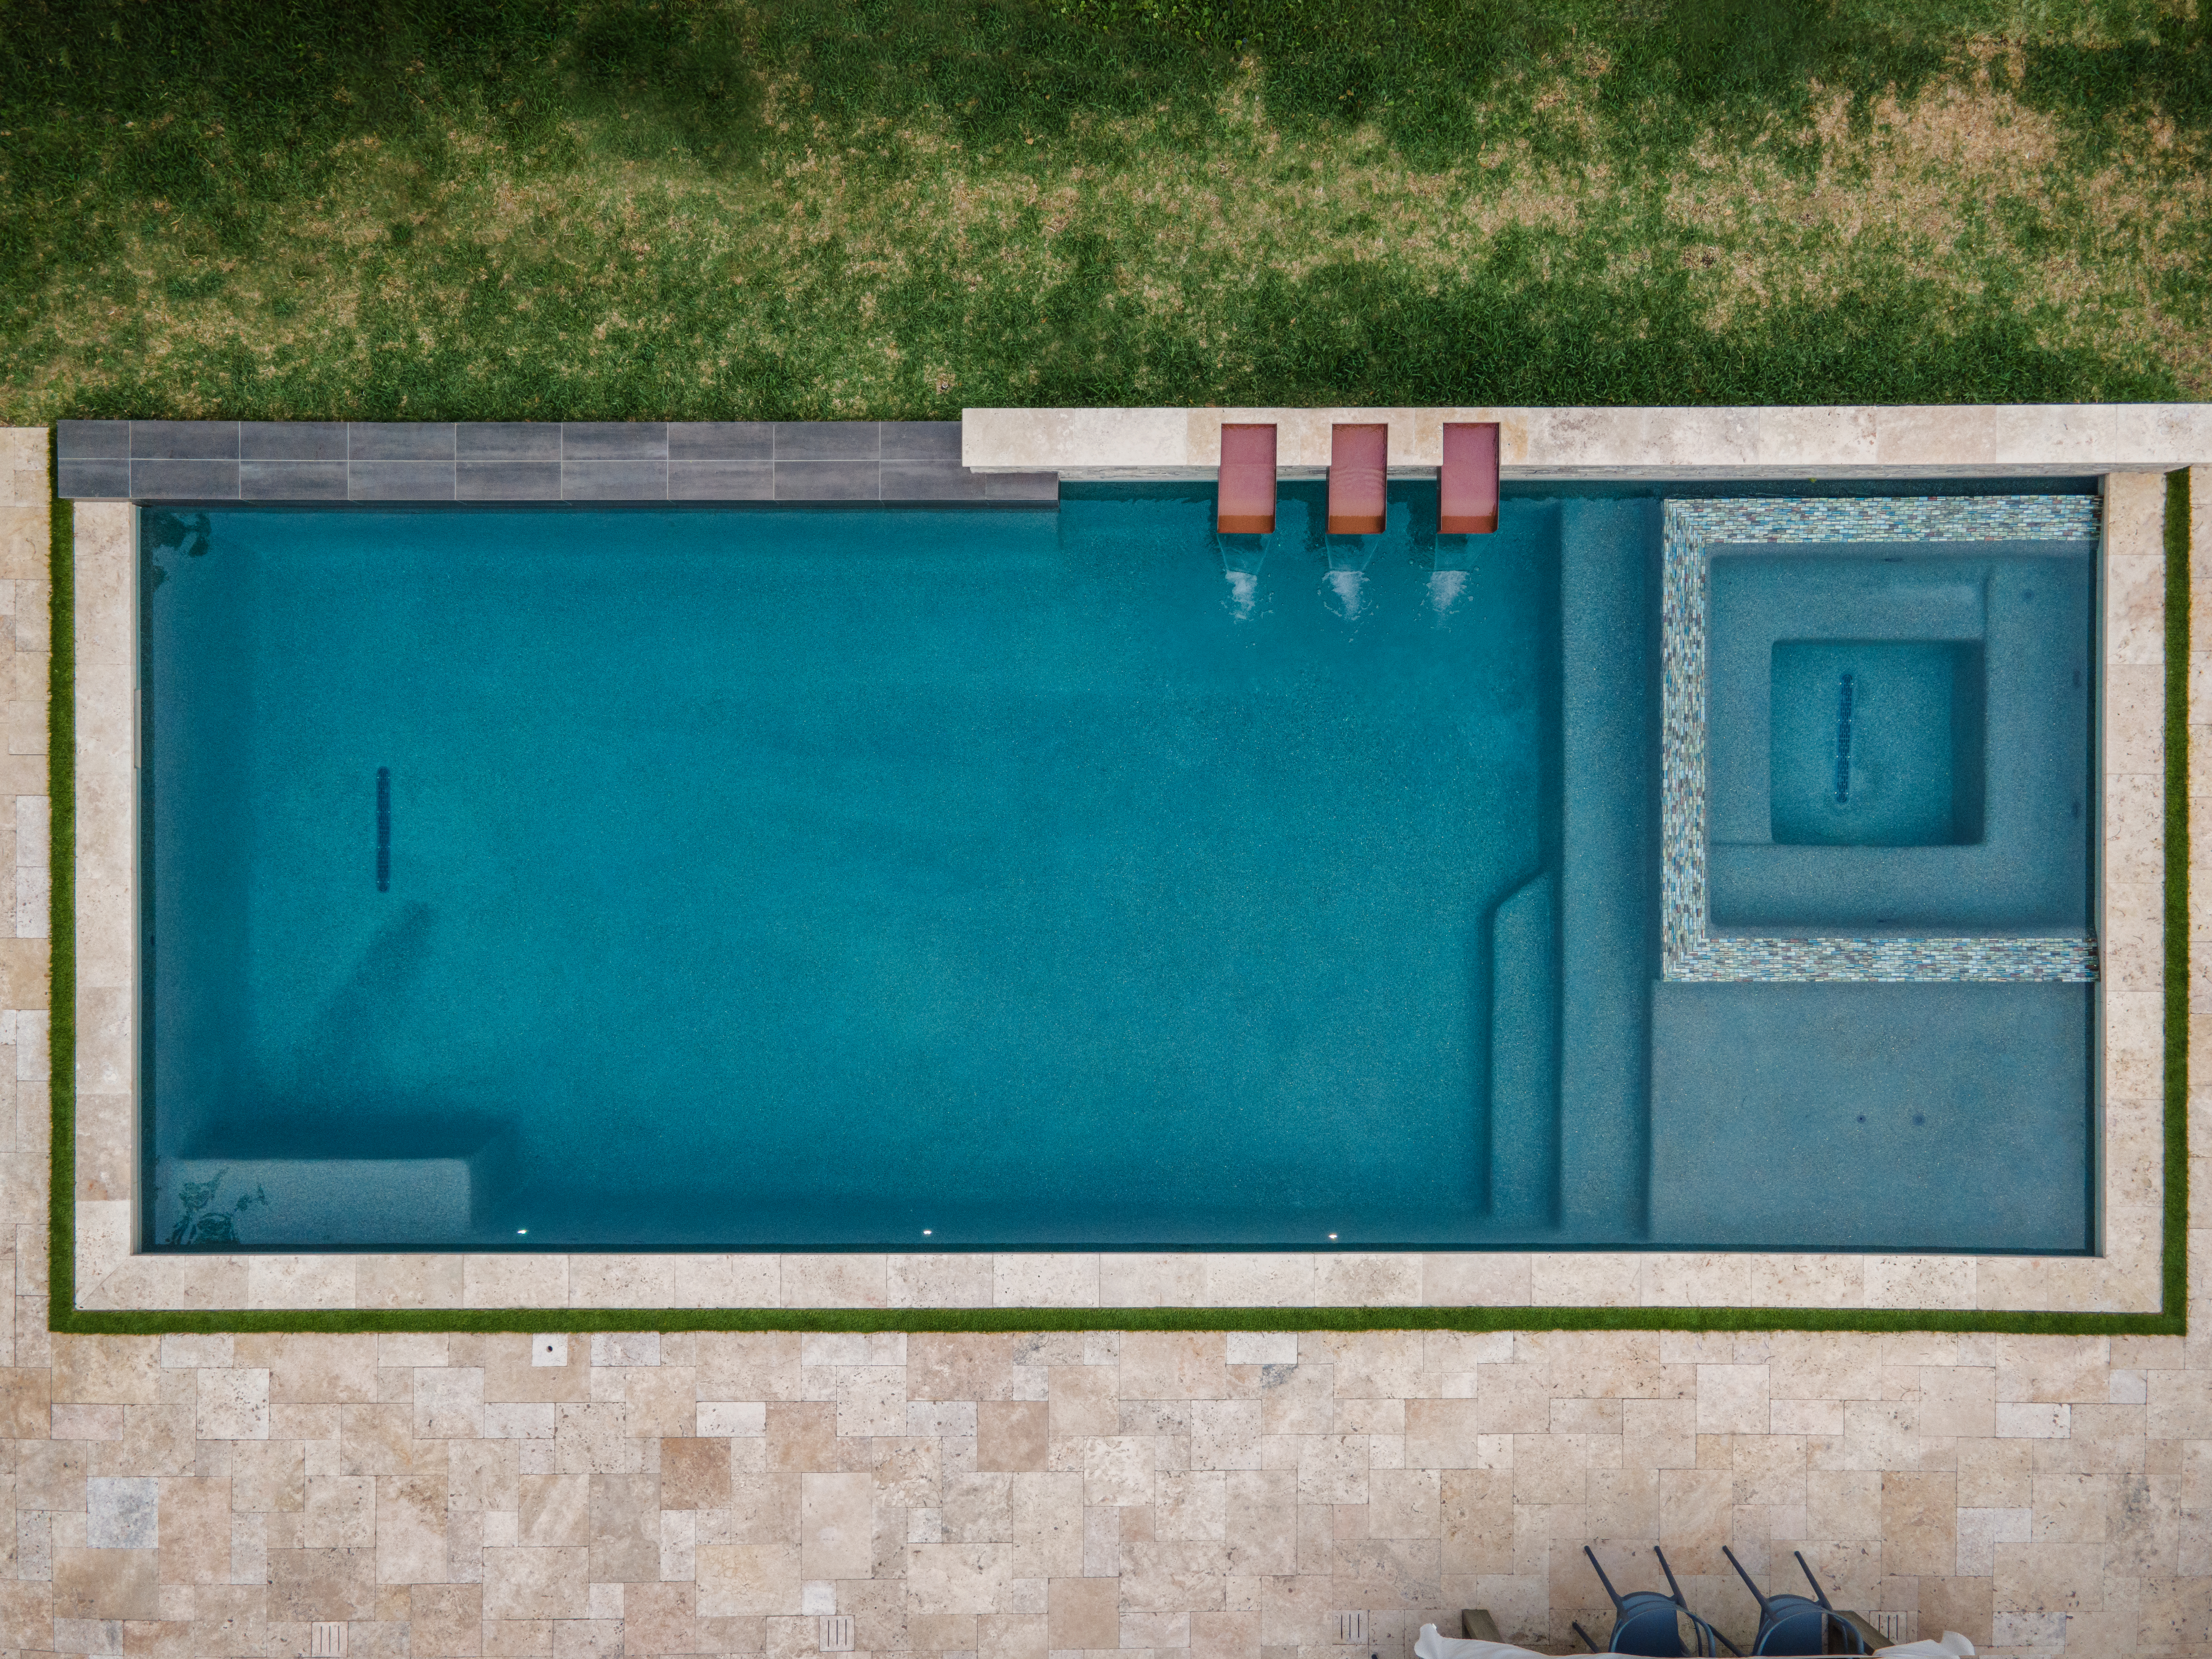 houston pool company sunset pools aerial view pool